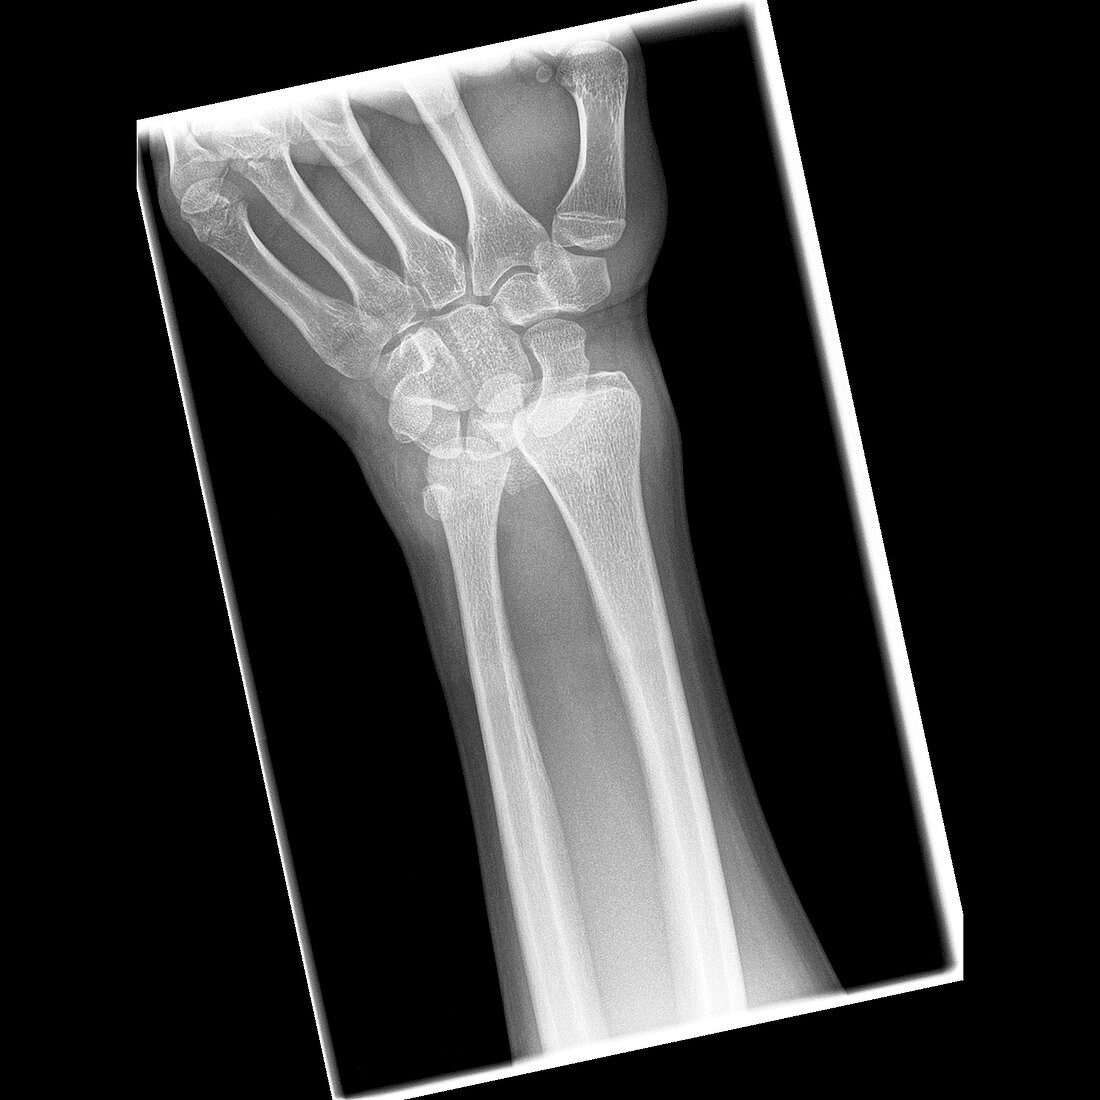 Dislocated wrist,X-ray